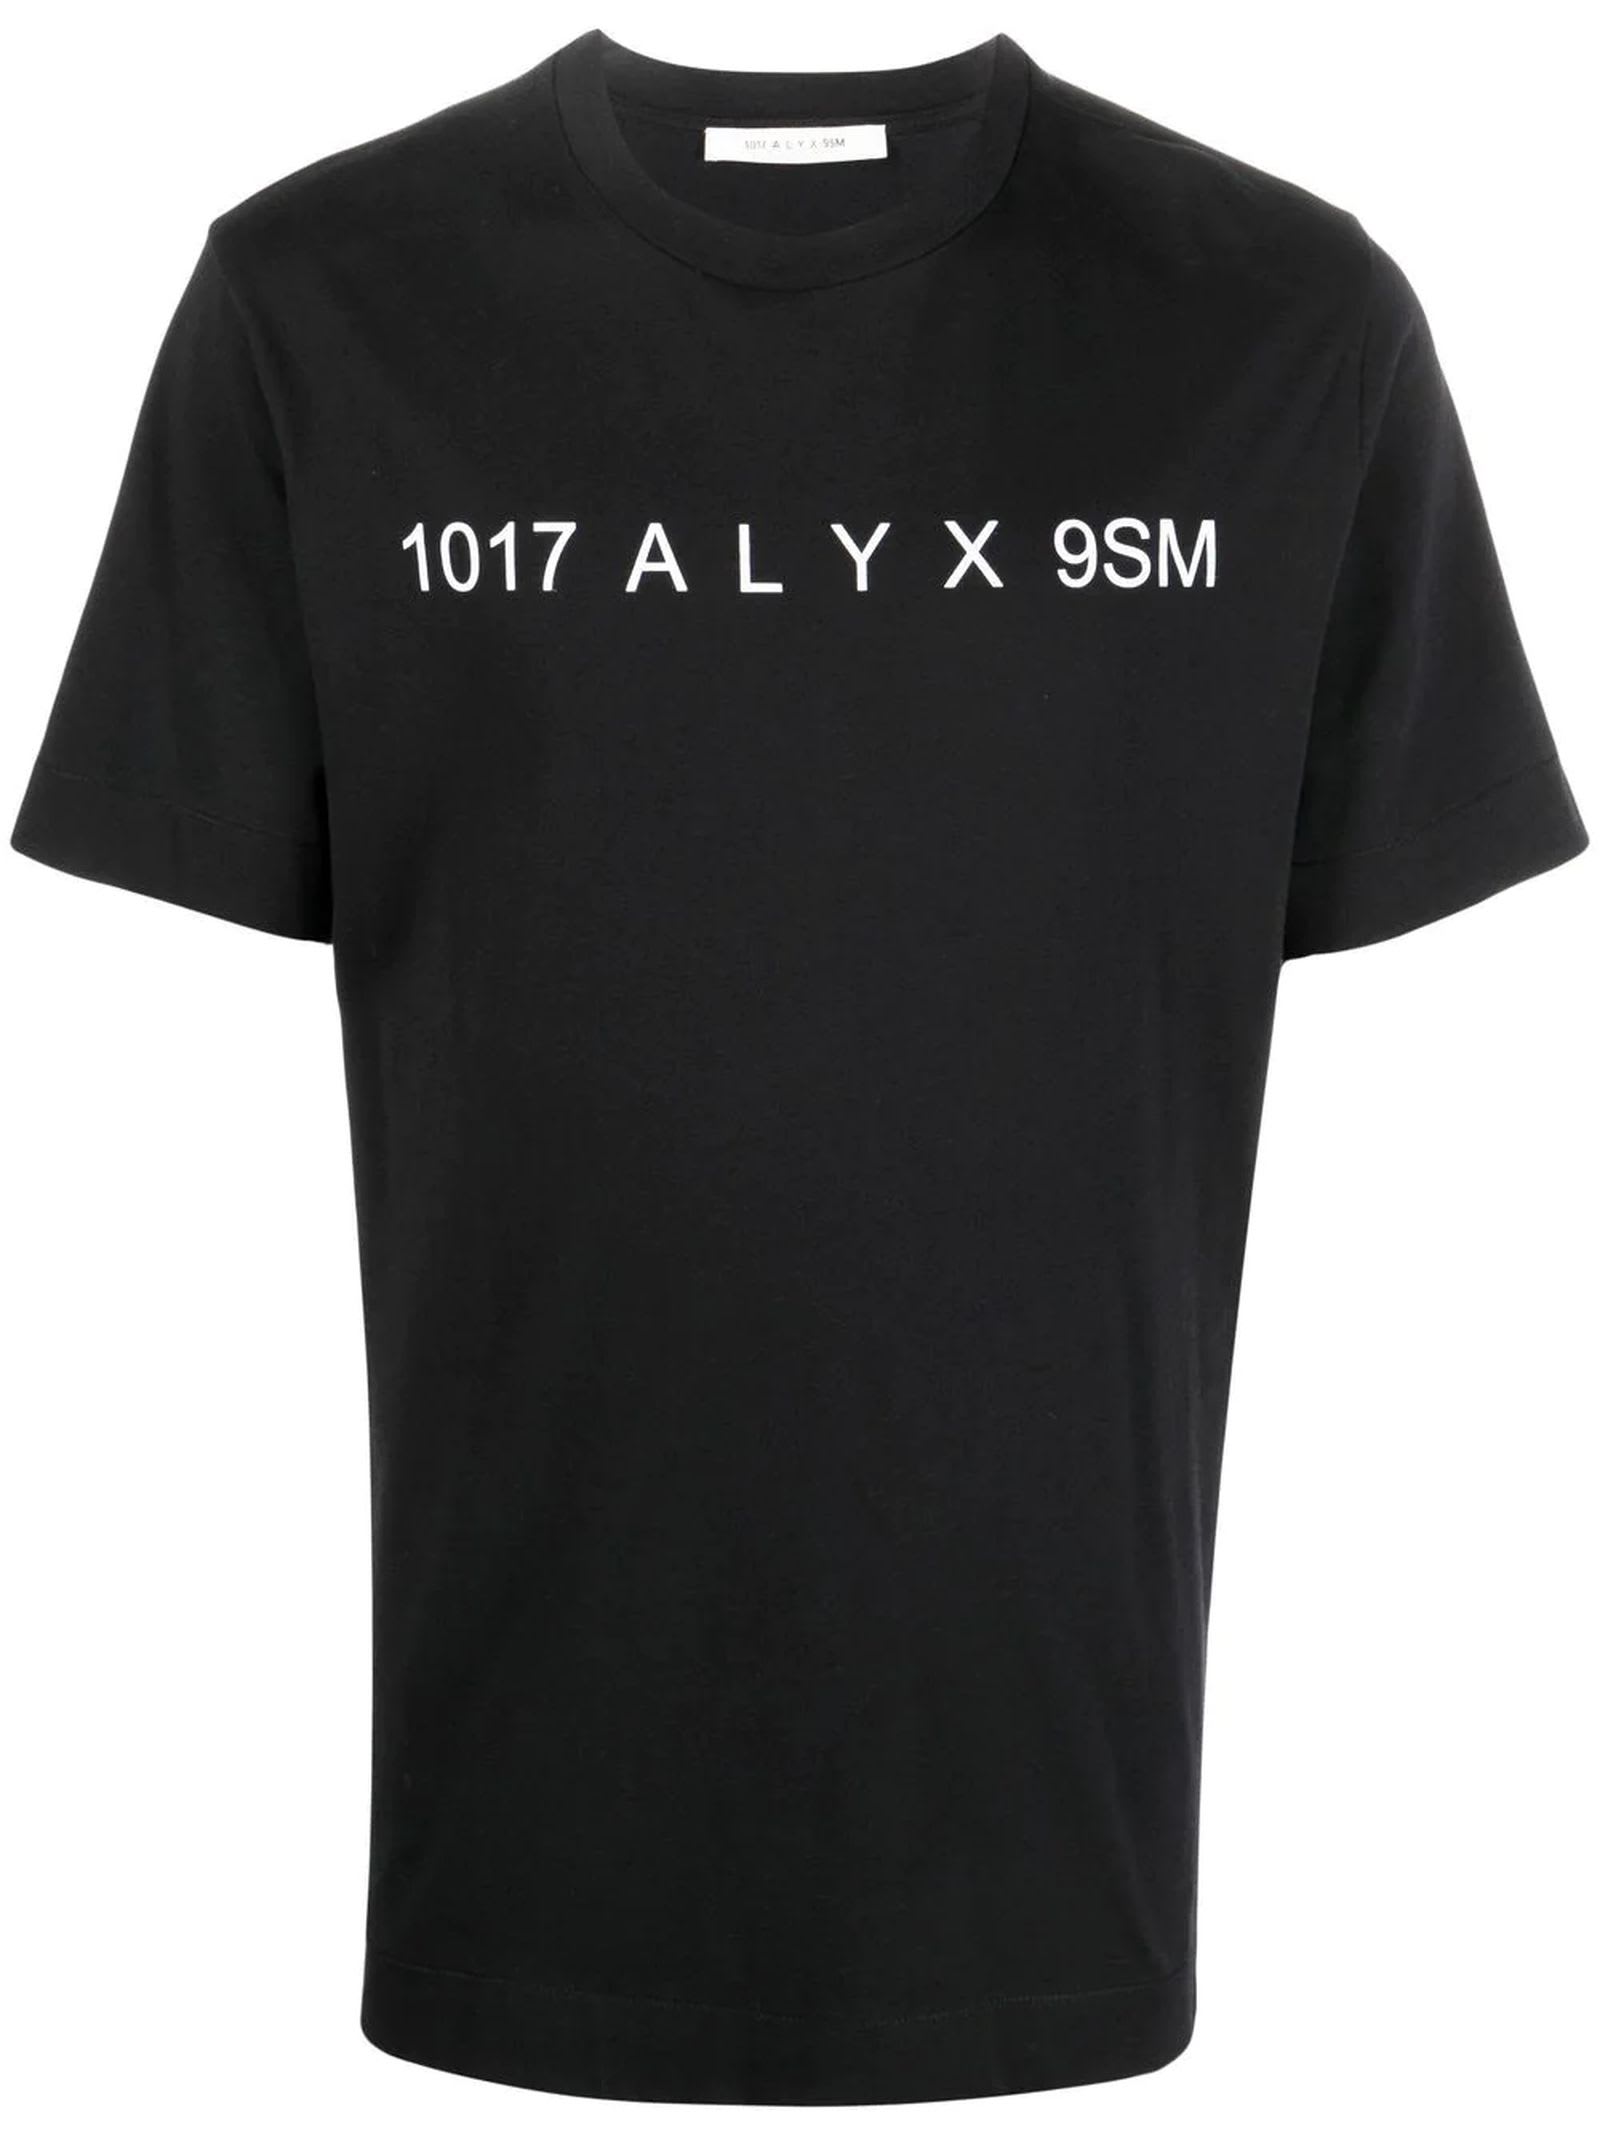 1017 ALYX 9SM Black Cotton T-shirt